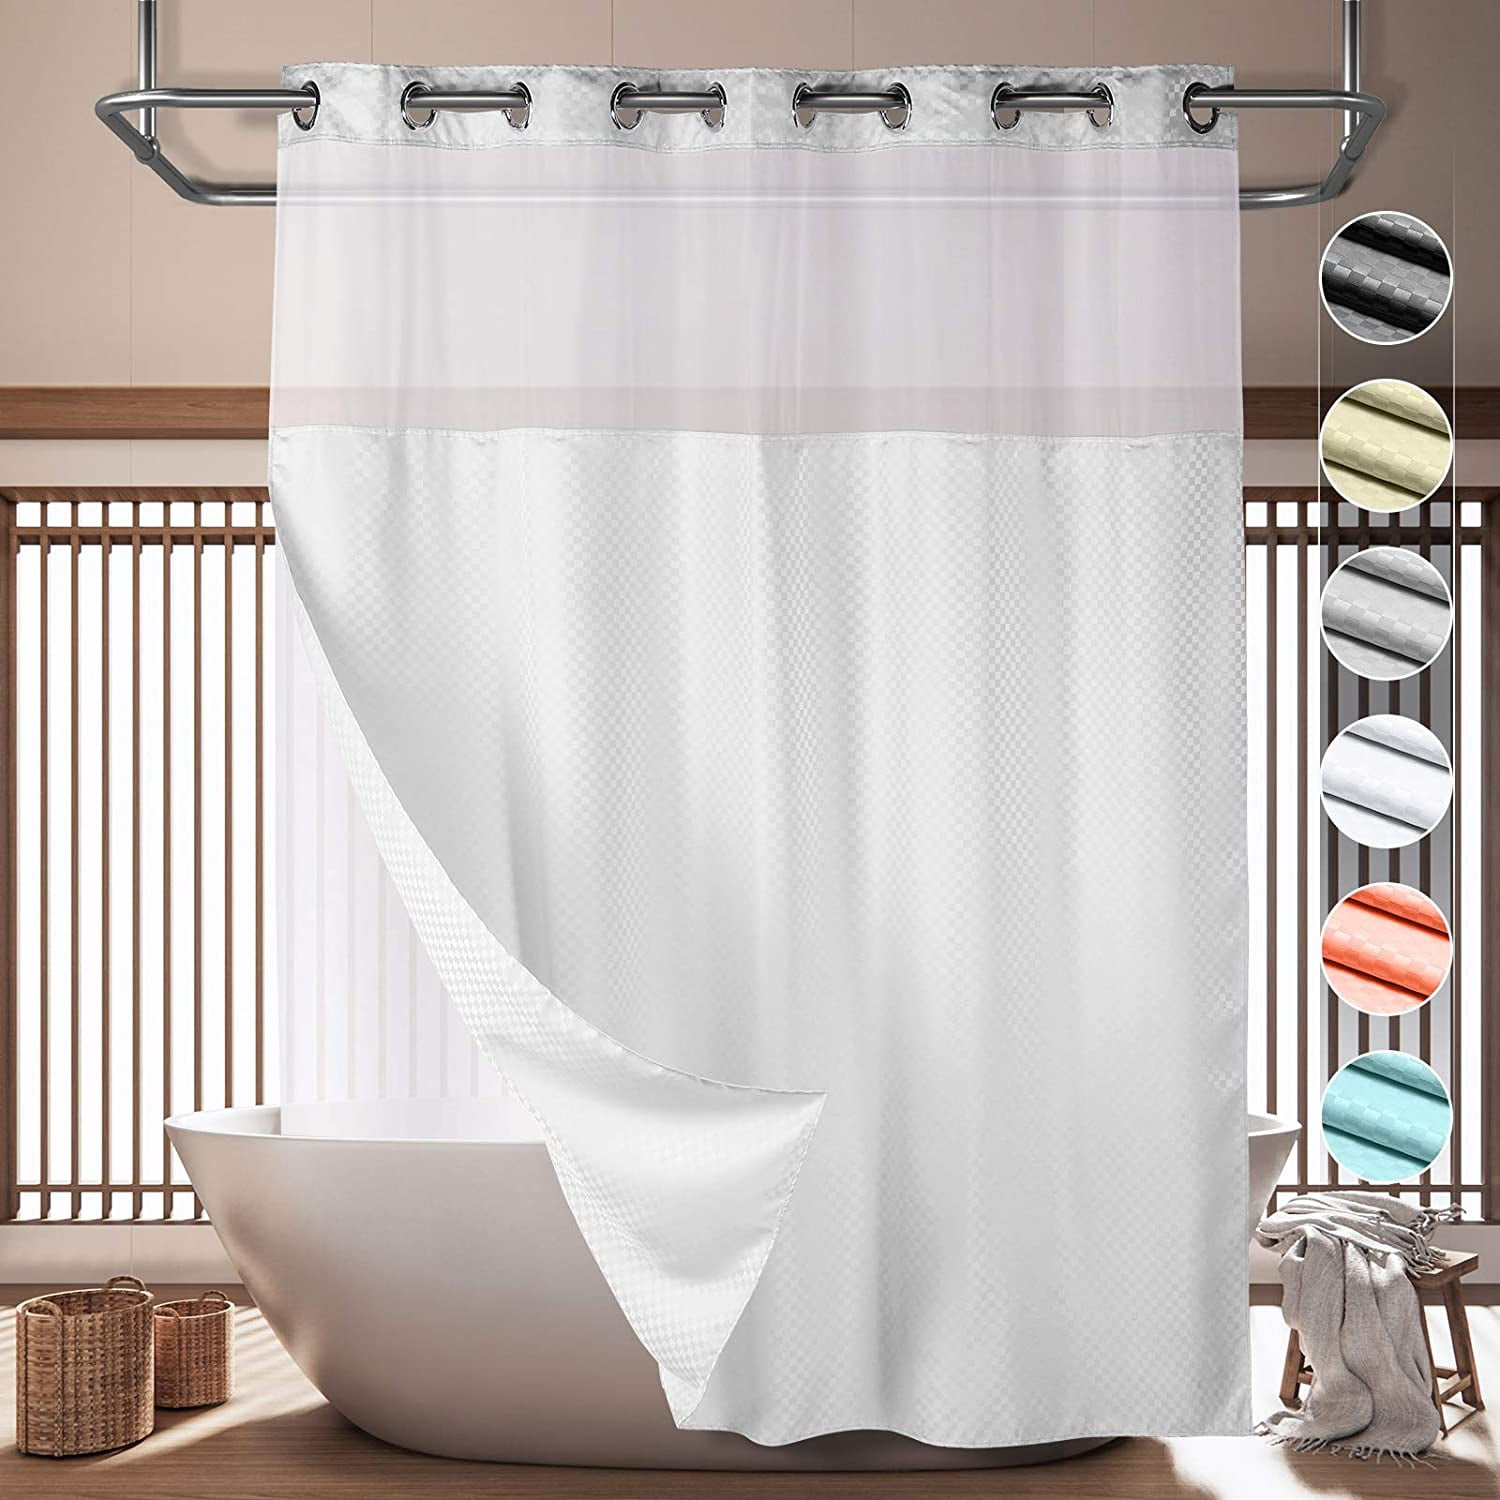 Hookless Shower Curtain w/Snap-in LinerBathroom Curtain Lagute SnapHook 